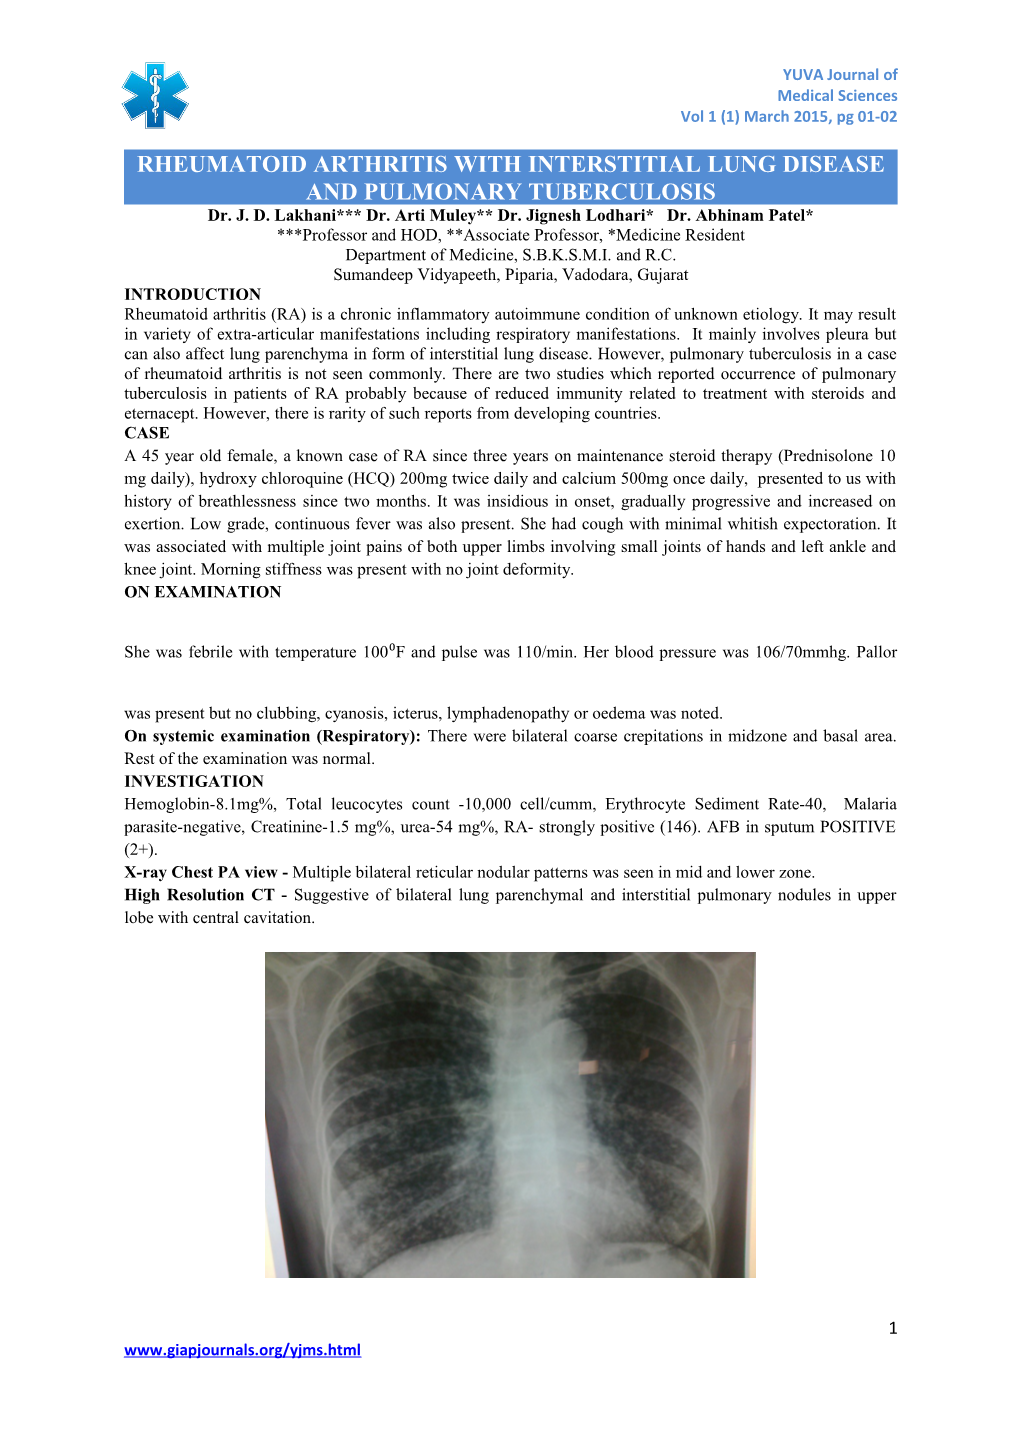 Rheumatoid Arthritis with Interstitial Lung Disease and Pulmonary Tuberculosis